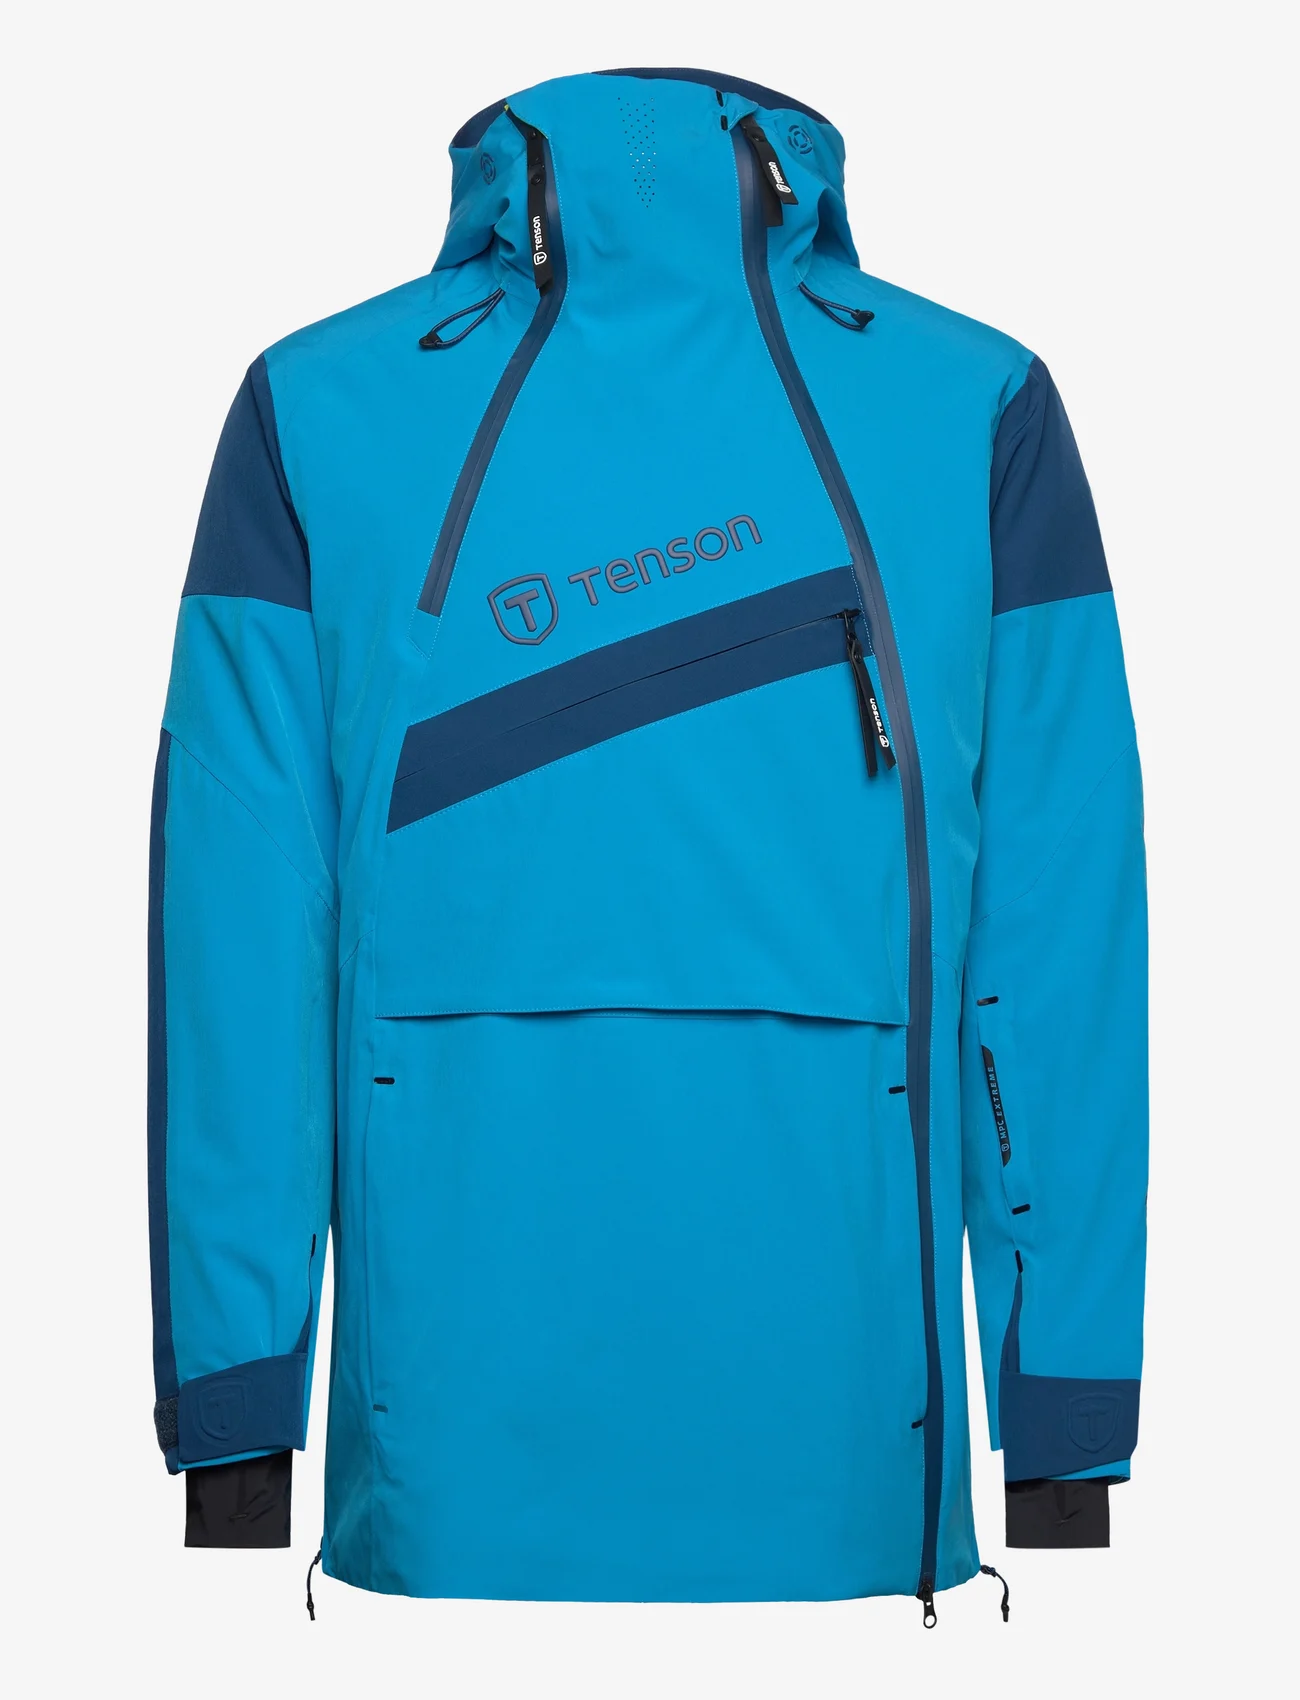 Tenson - Aerismo JackoRak M Jackets - ski jackets - blue - 0